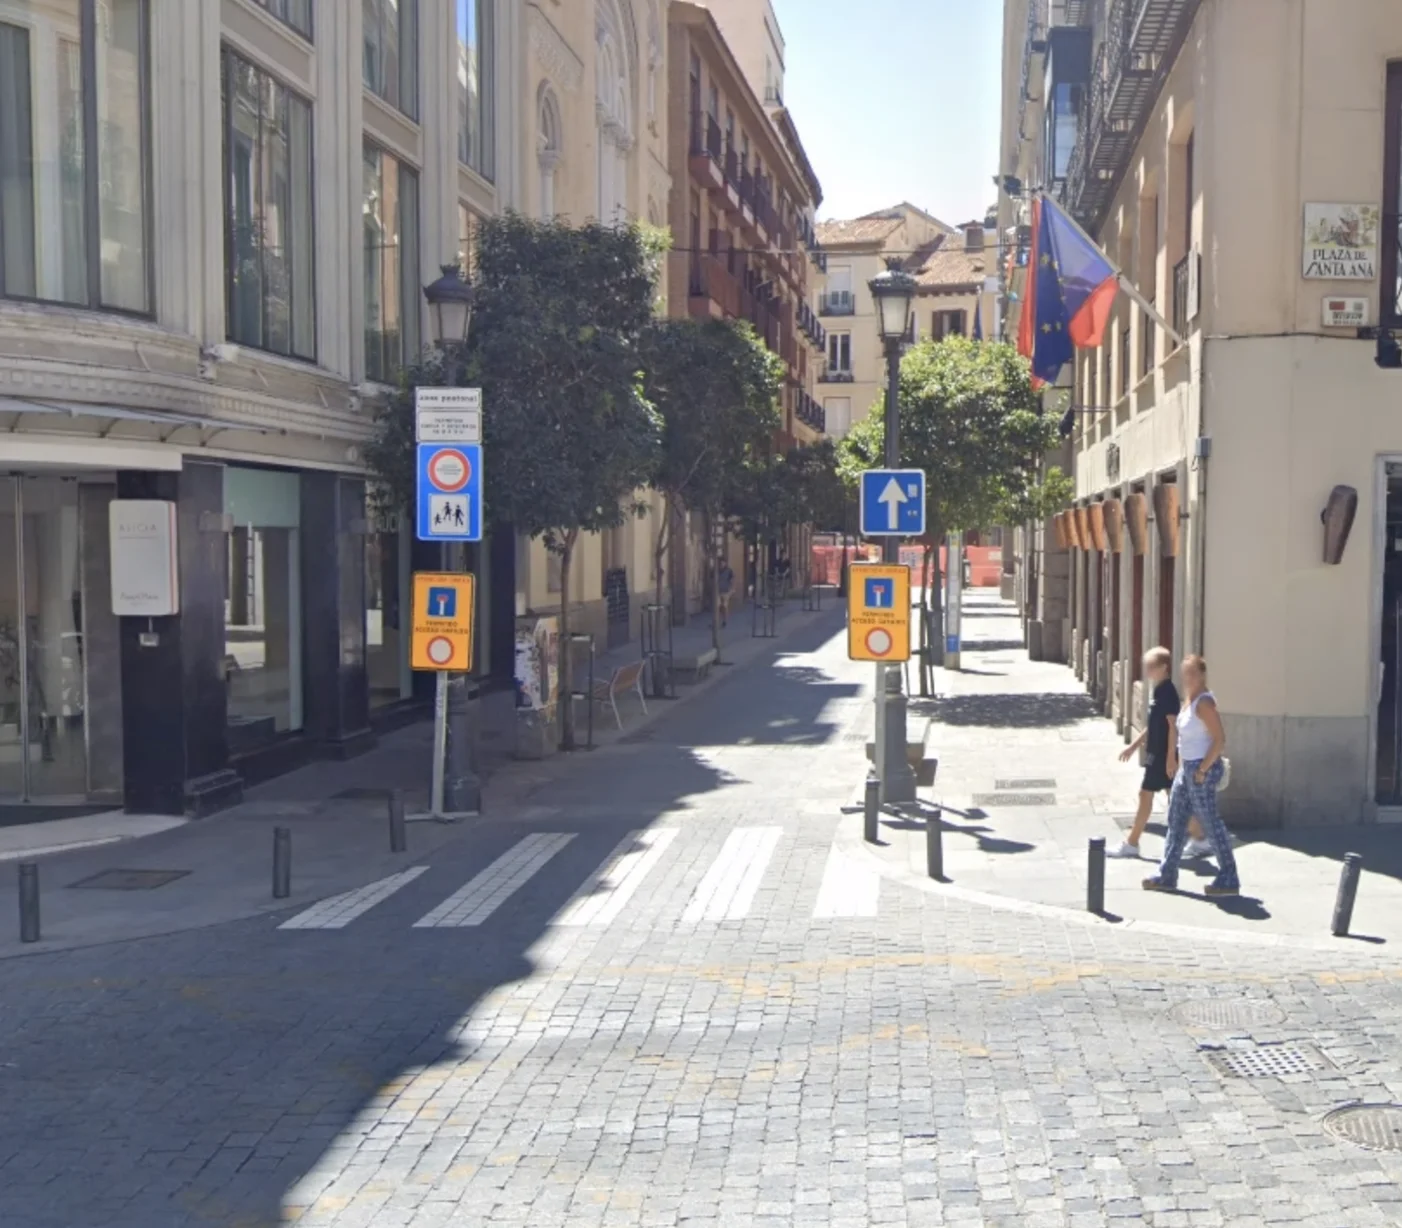 A street-level image of crosswalks in Madrid